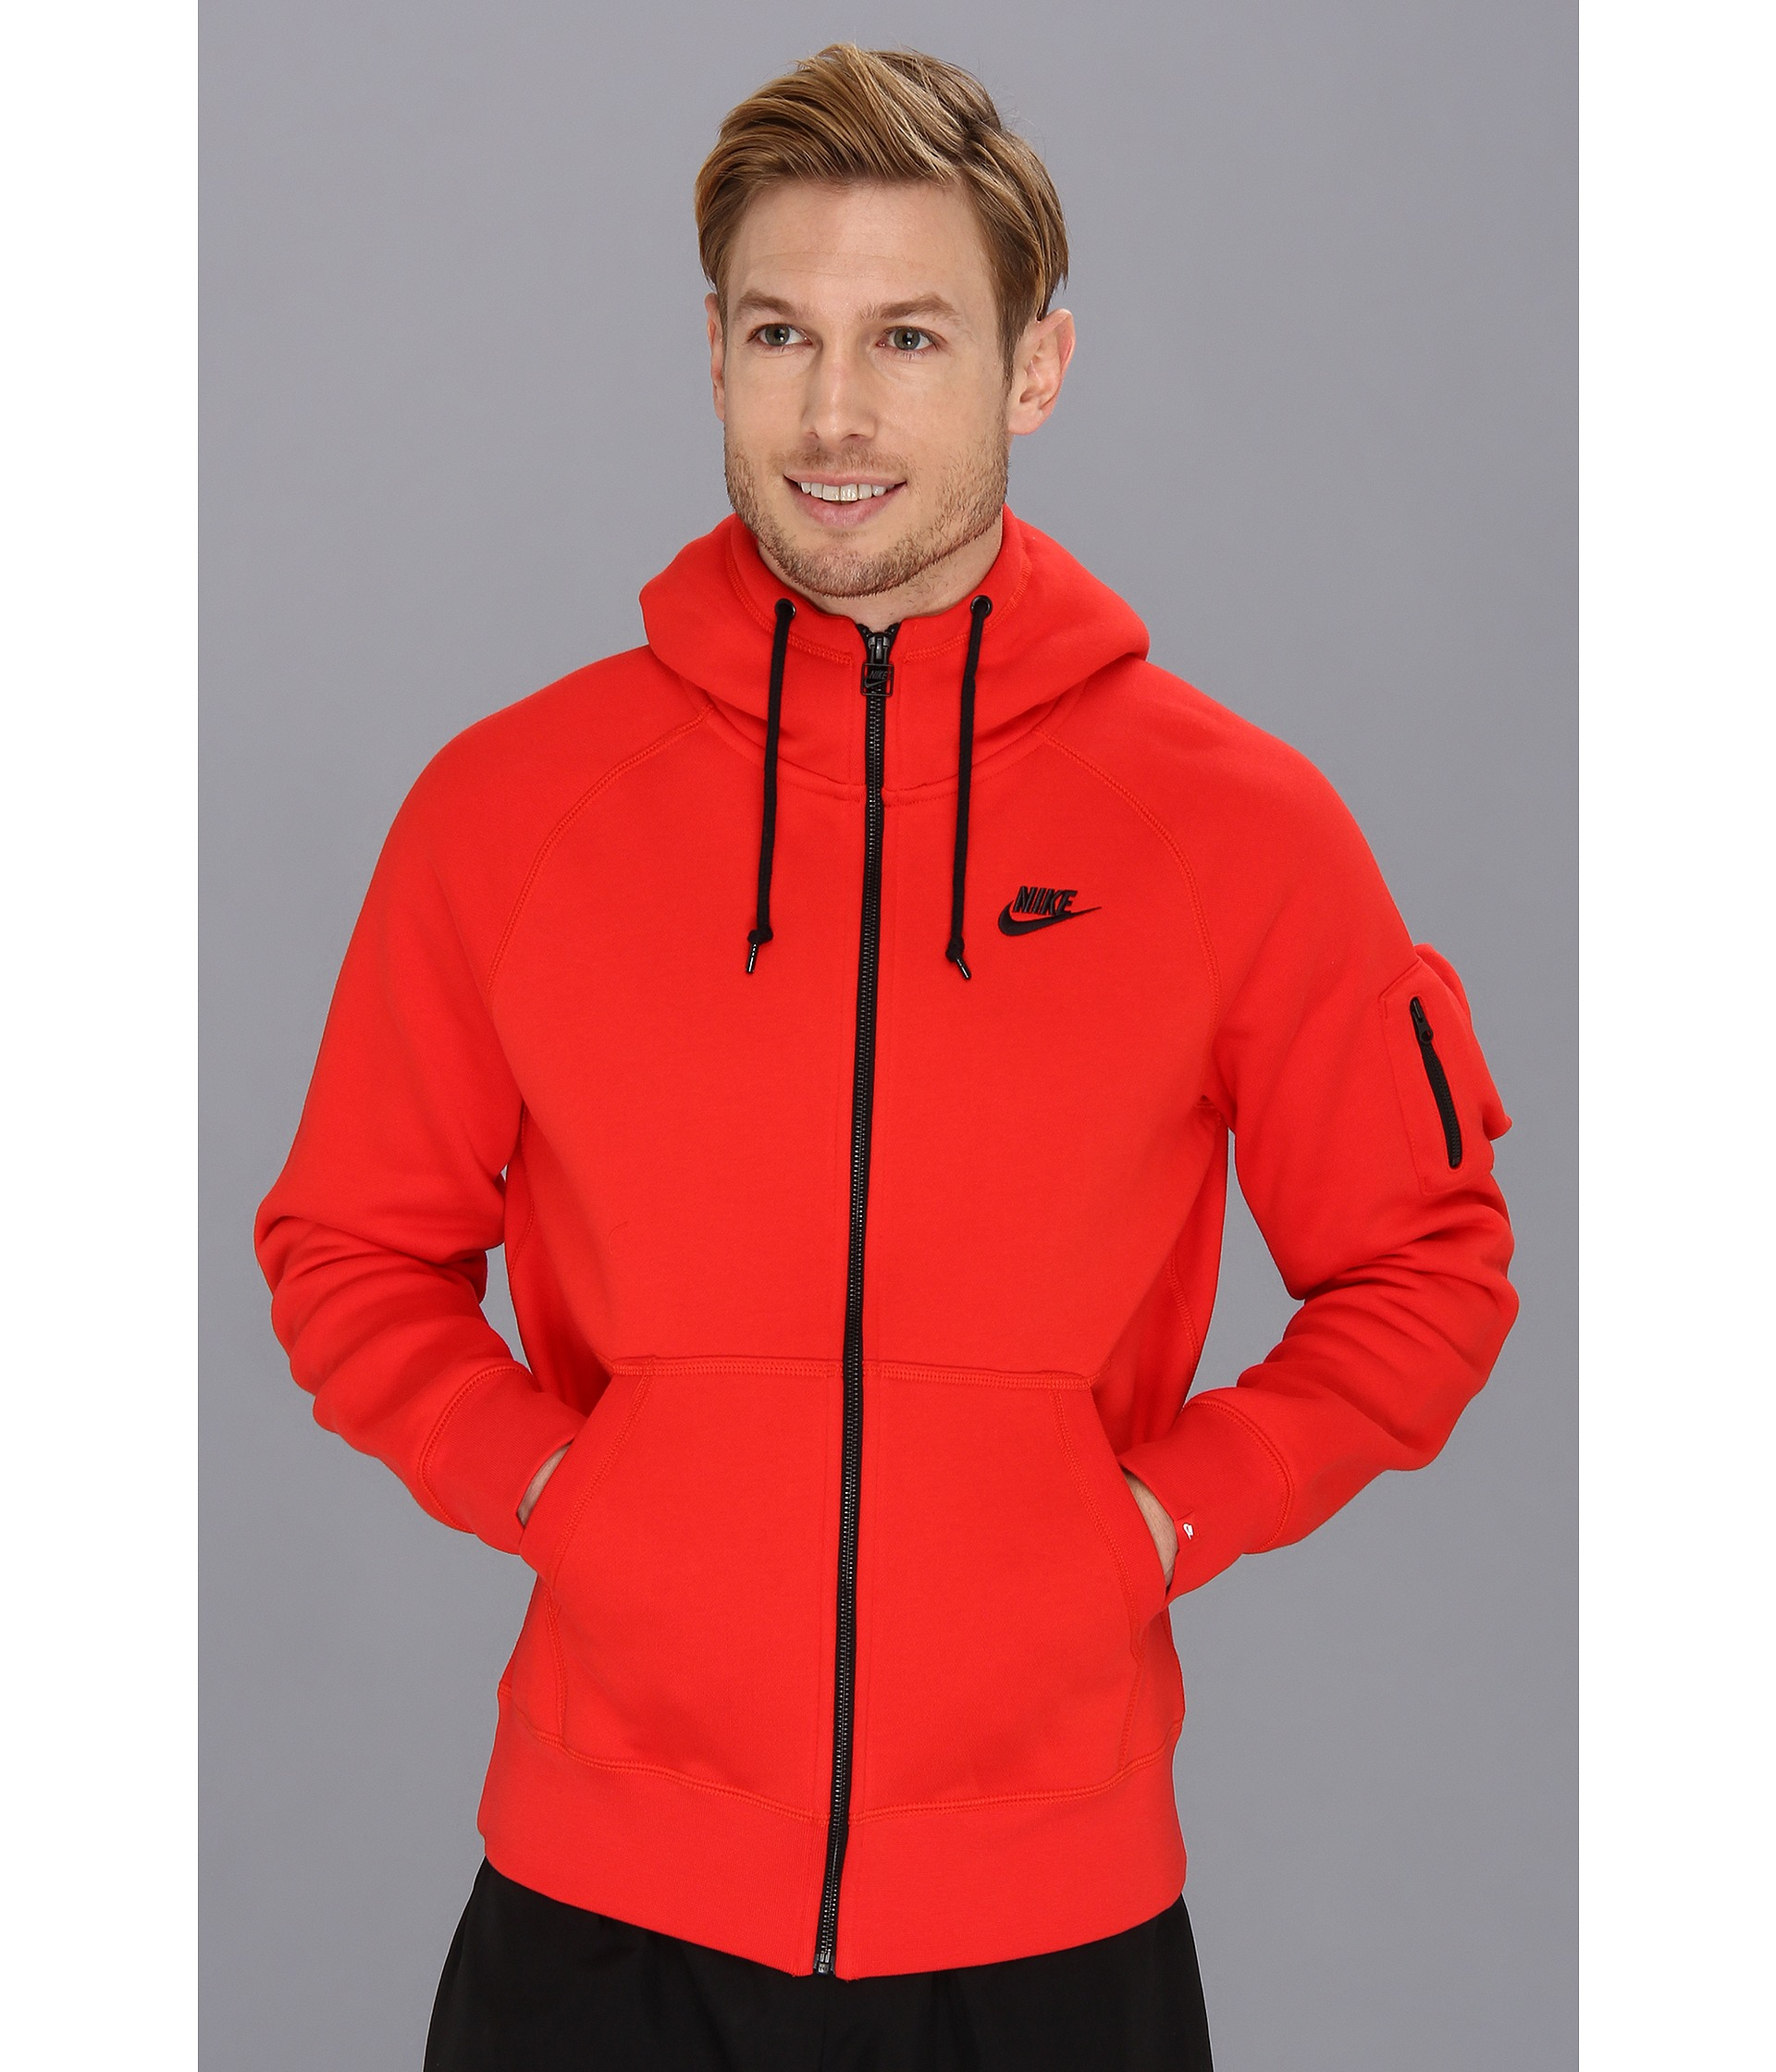 Nike Aw77 Fleece Fz Hoodie In Red For Men Lyst